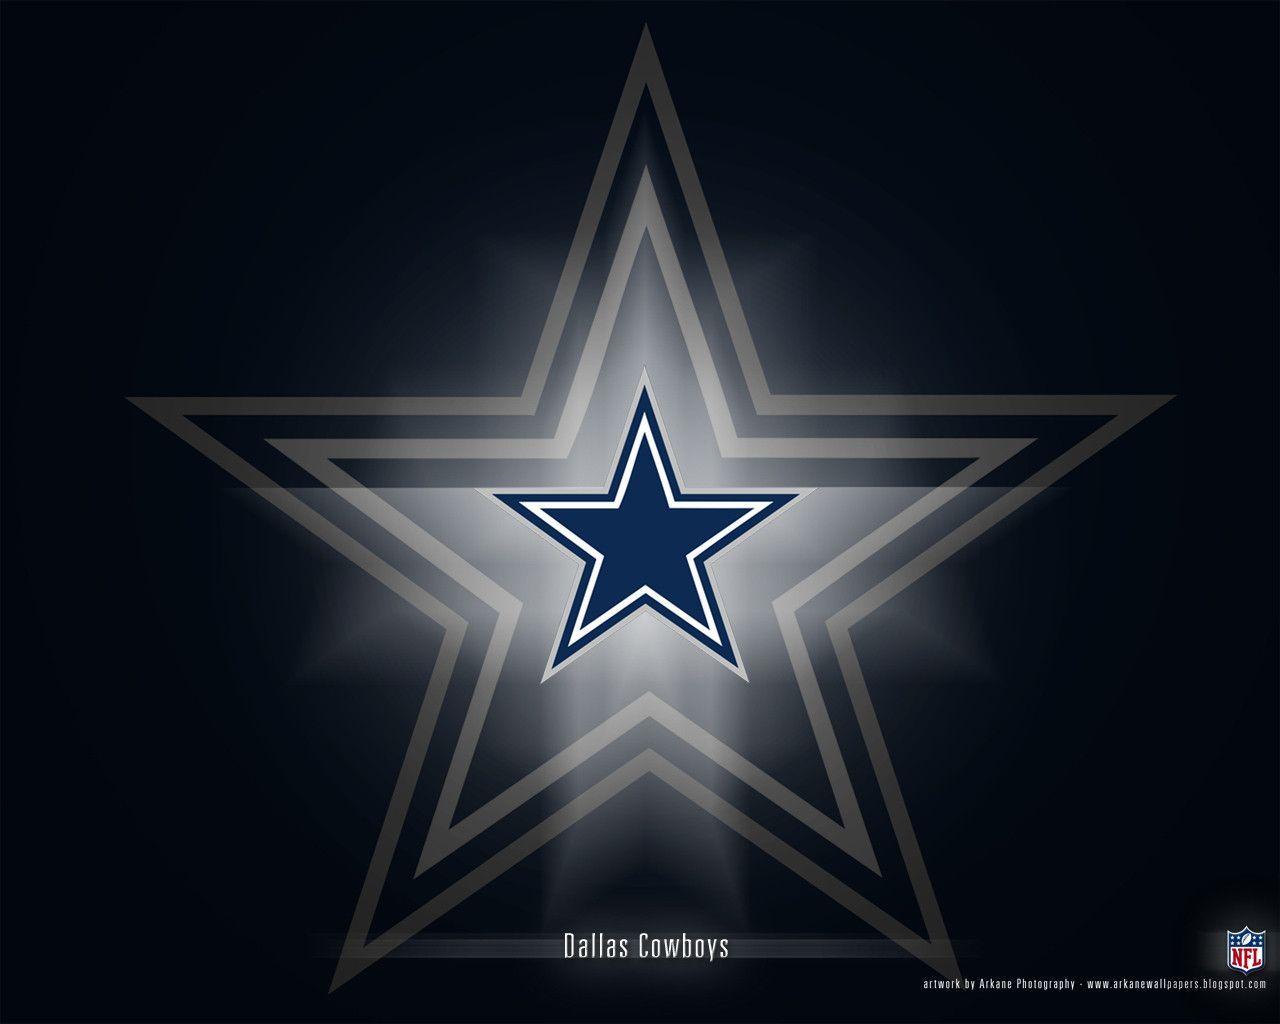 Dallas Cowboys Desktop Backgrounds Hd 24668 Image